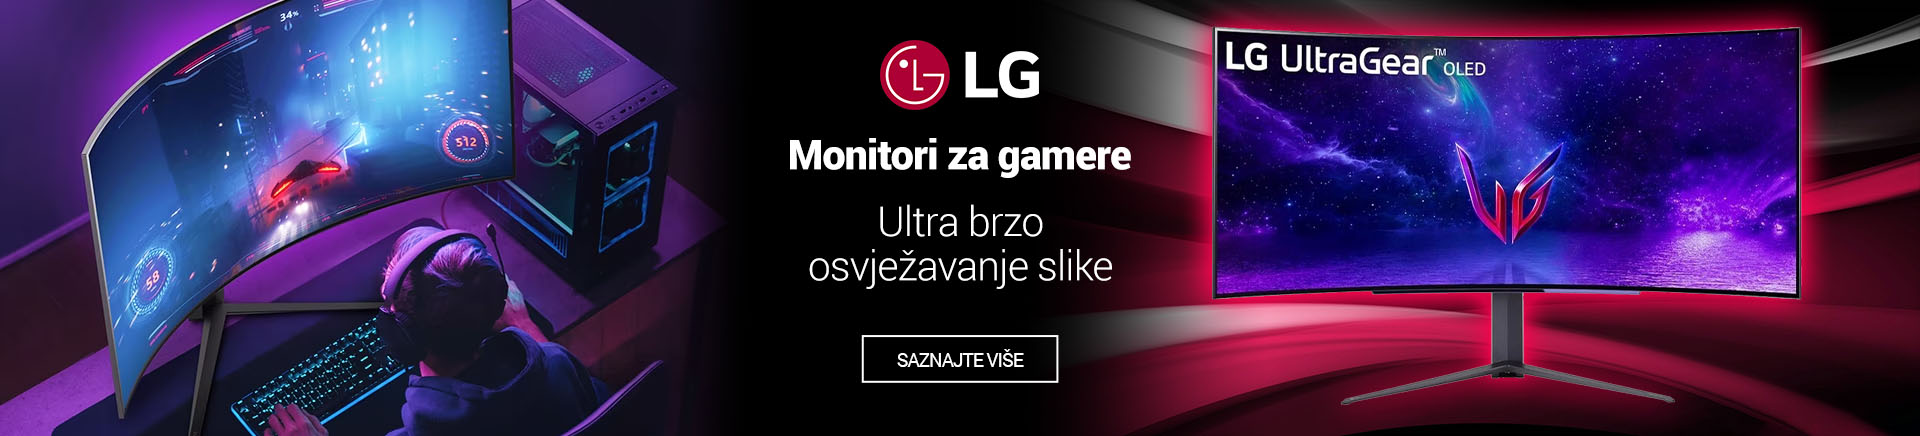 HR LG Gaming Monitori Ultragear MOBILE za APP 760x872.jpg